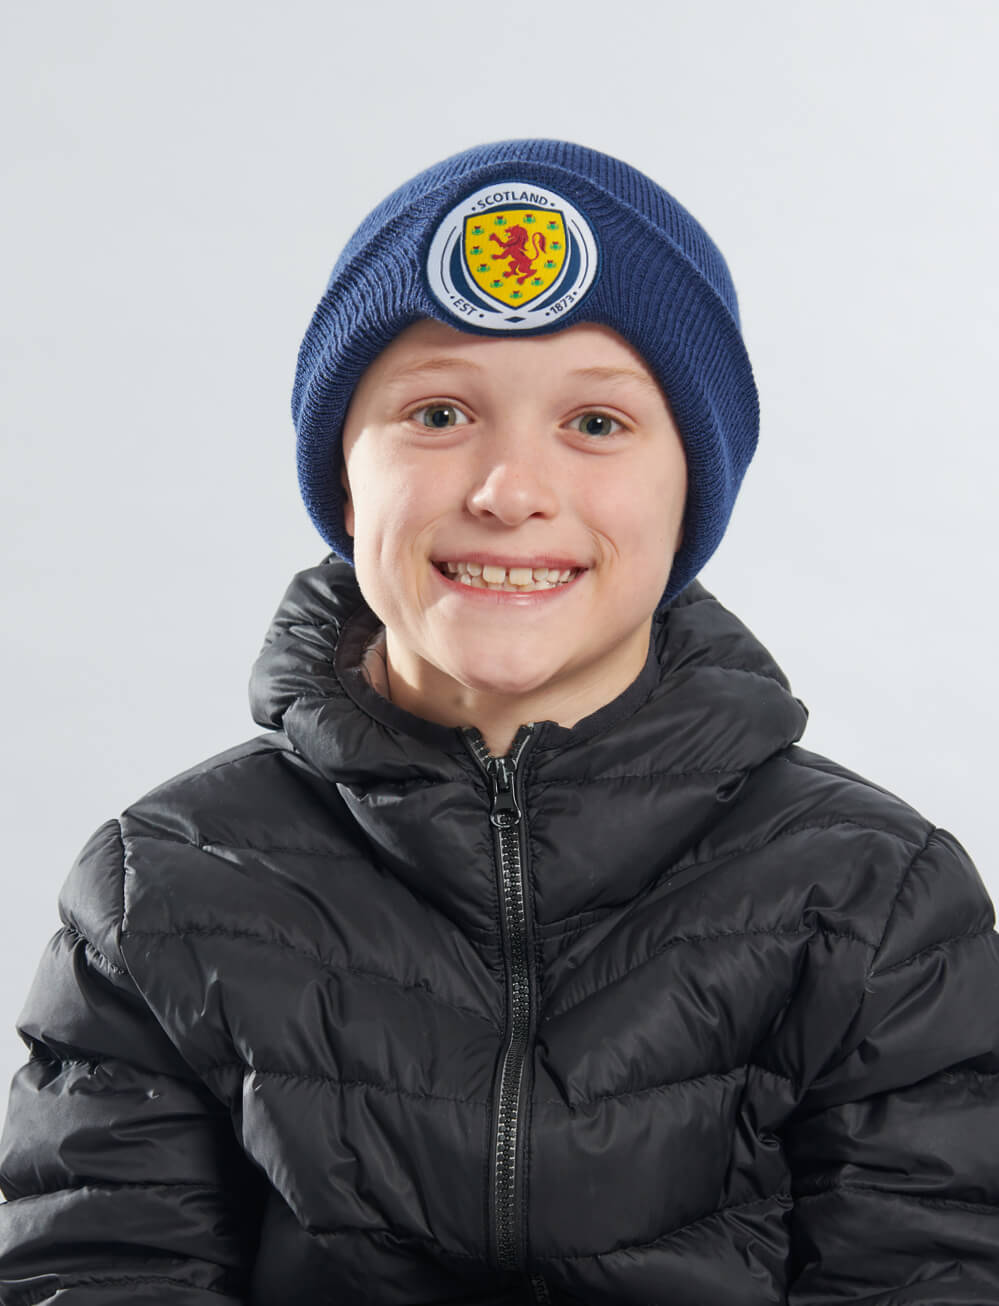 Official Team Scotland Kids Beanie - Blue - The World Football Store